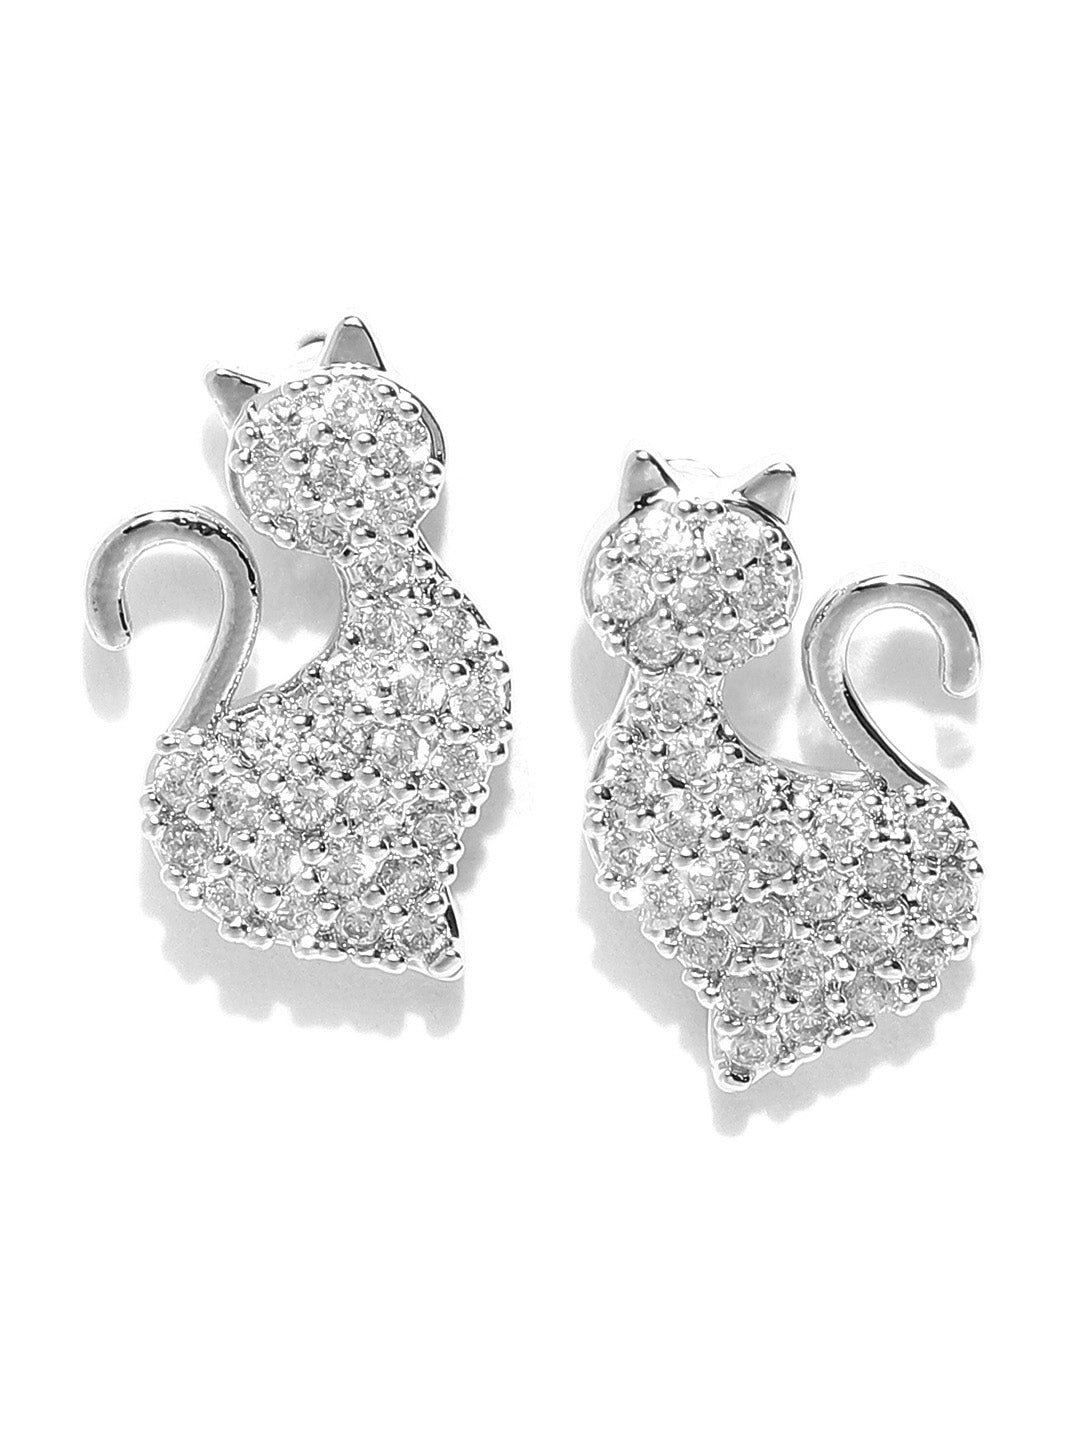 Silver Plated Peacock Inspired Stud Earrings For Girls & Women